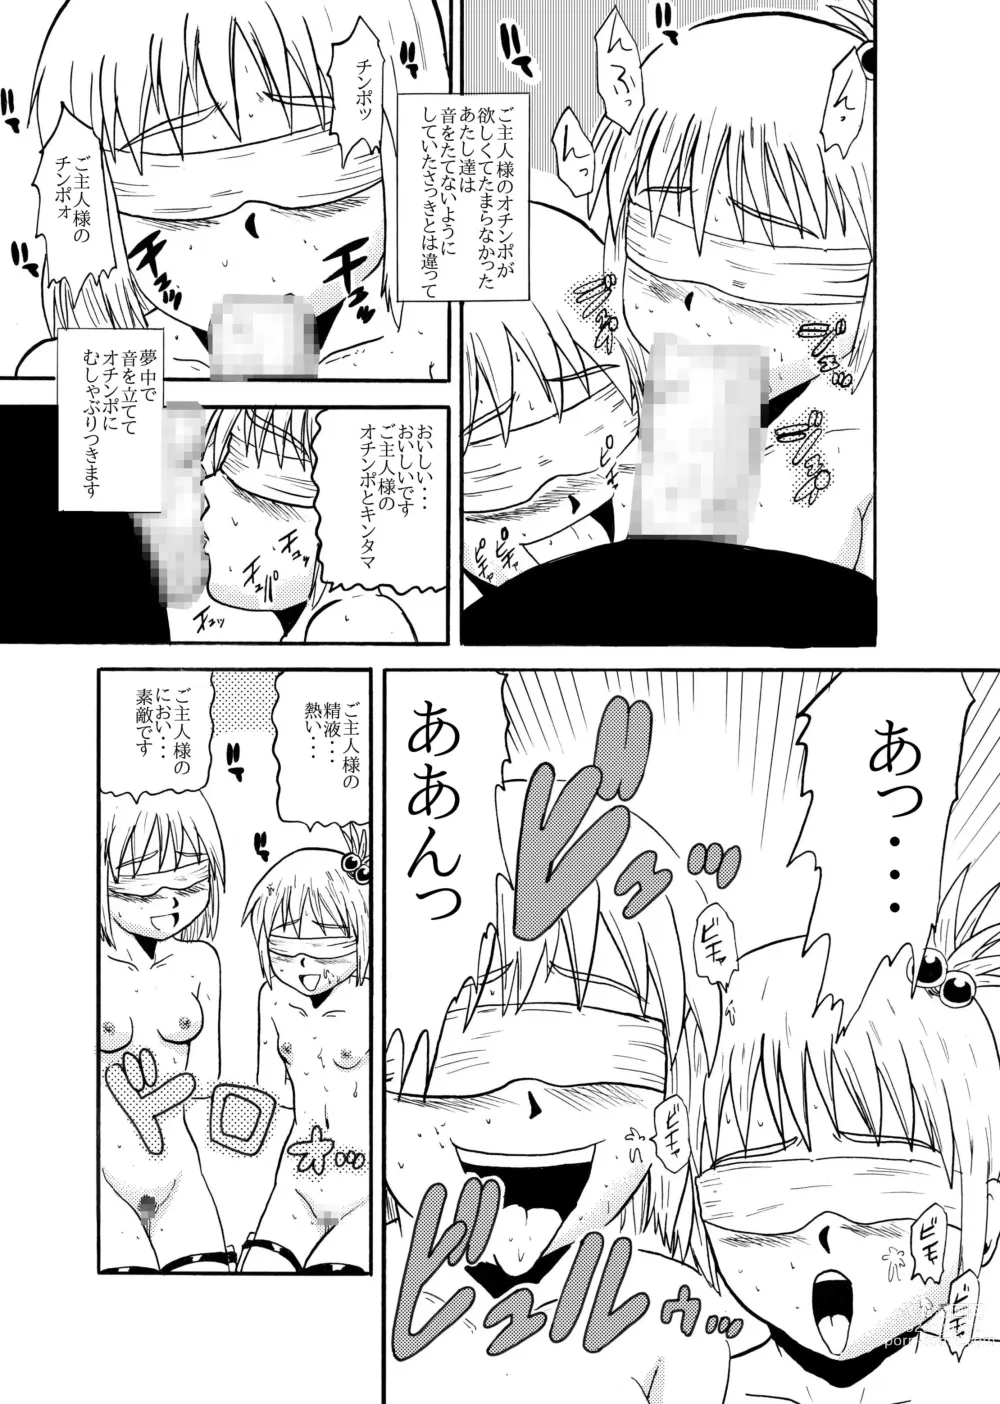 Page 21 of manga Together with mom, Haneda family training